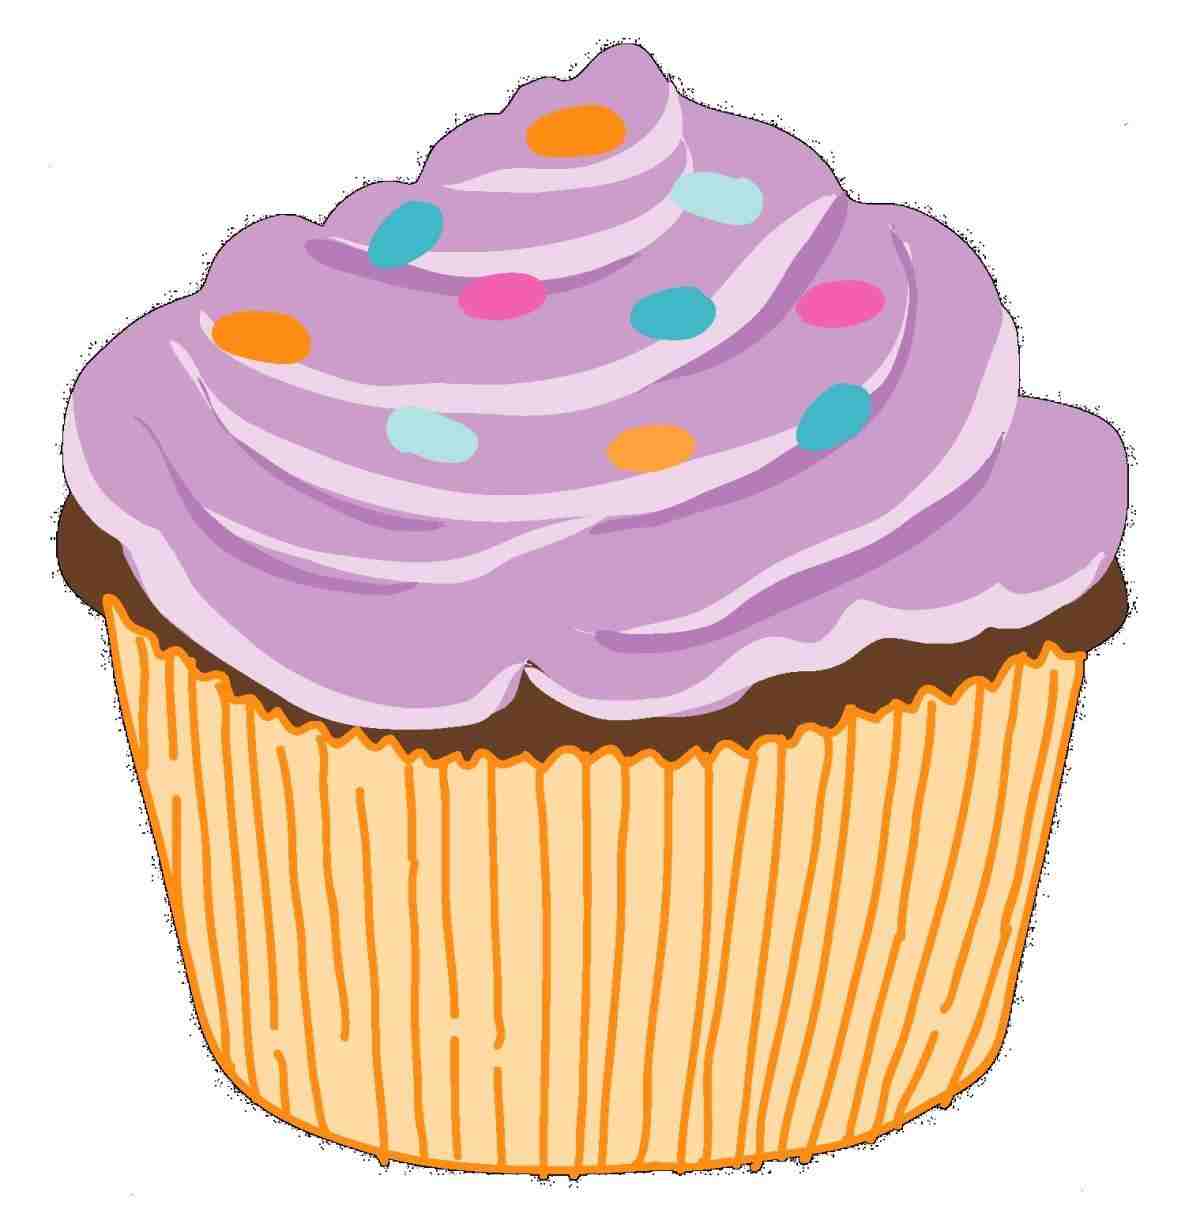 Free images clipartixrhclipartixcom . Cupcakes clipart huge cupcake